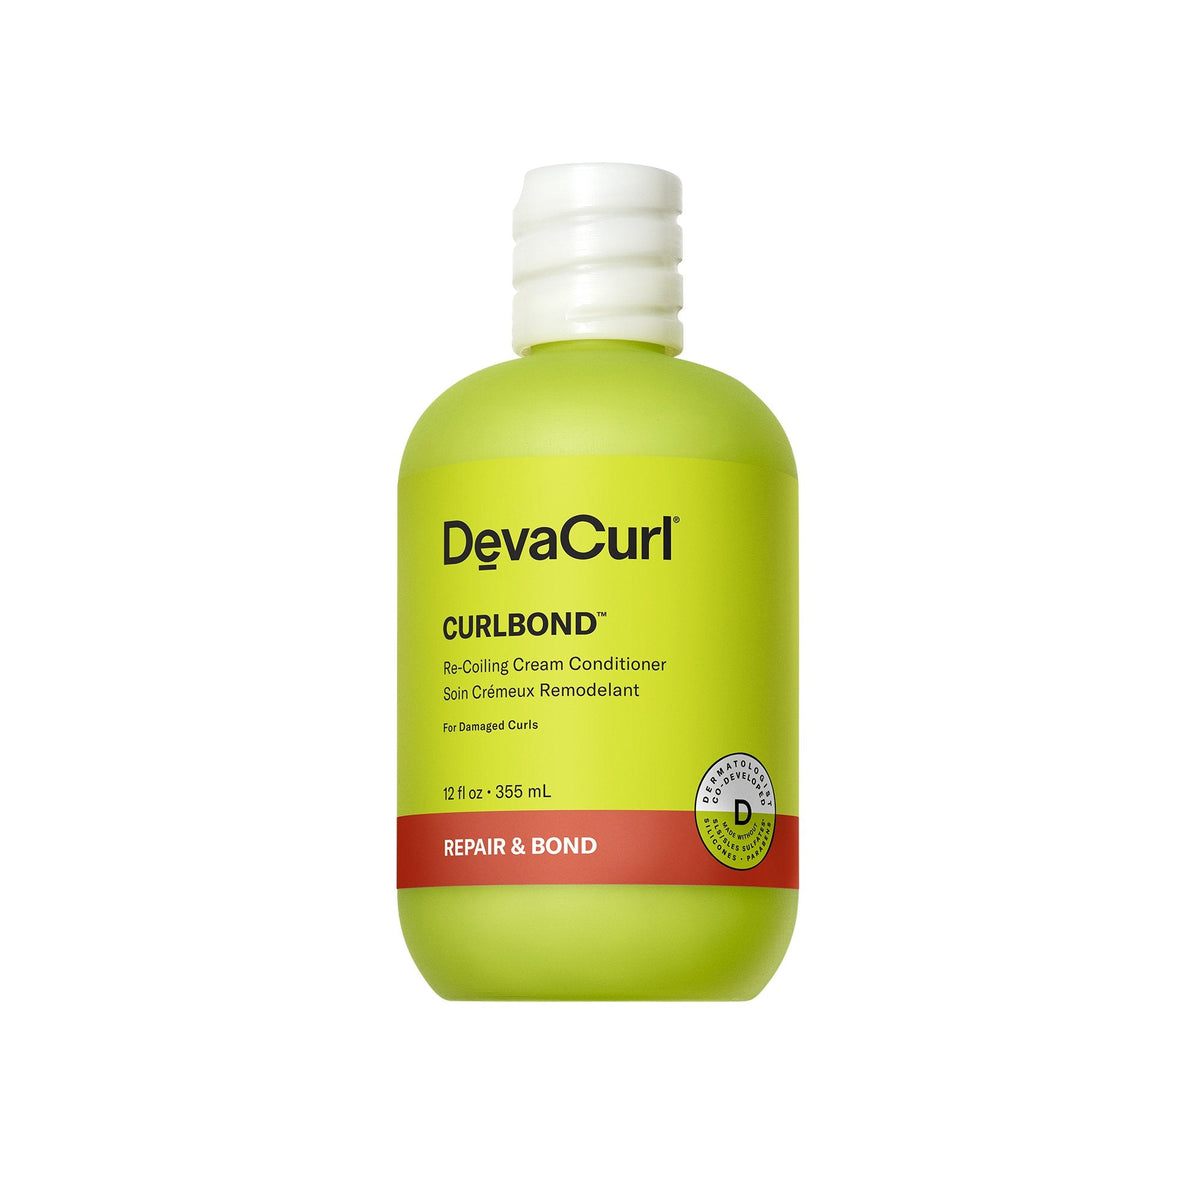 New! DevaCurl CurlBond Conditioner - 12oz - by Deva Curl |ProCare Outlet|